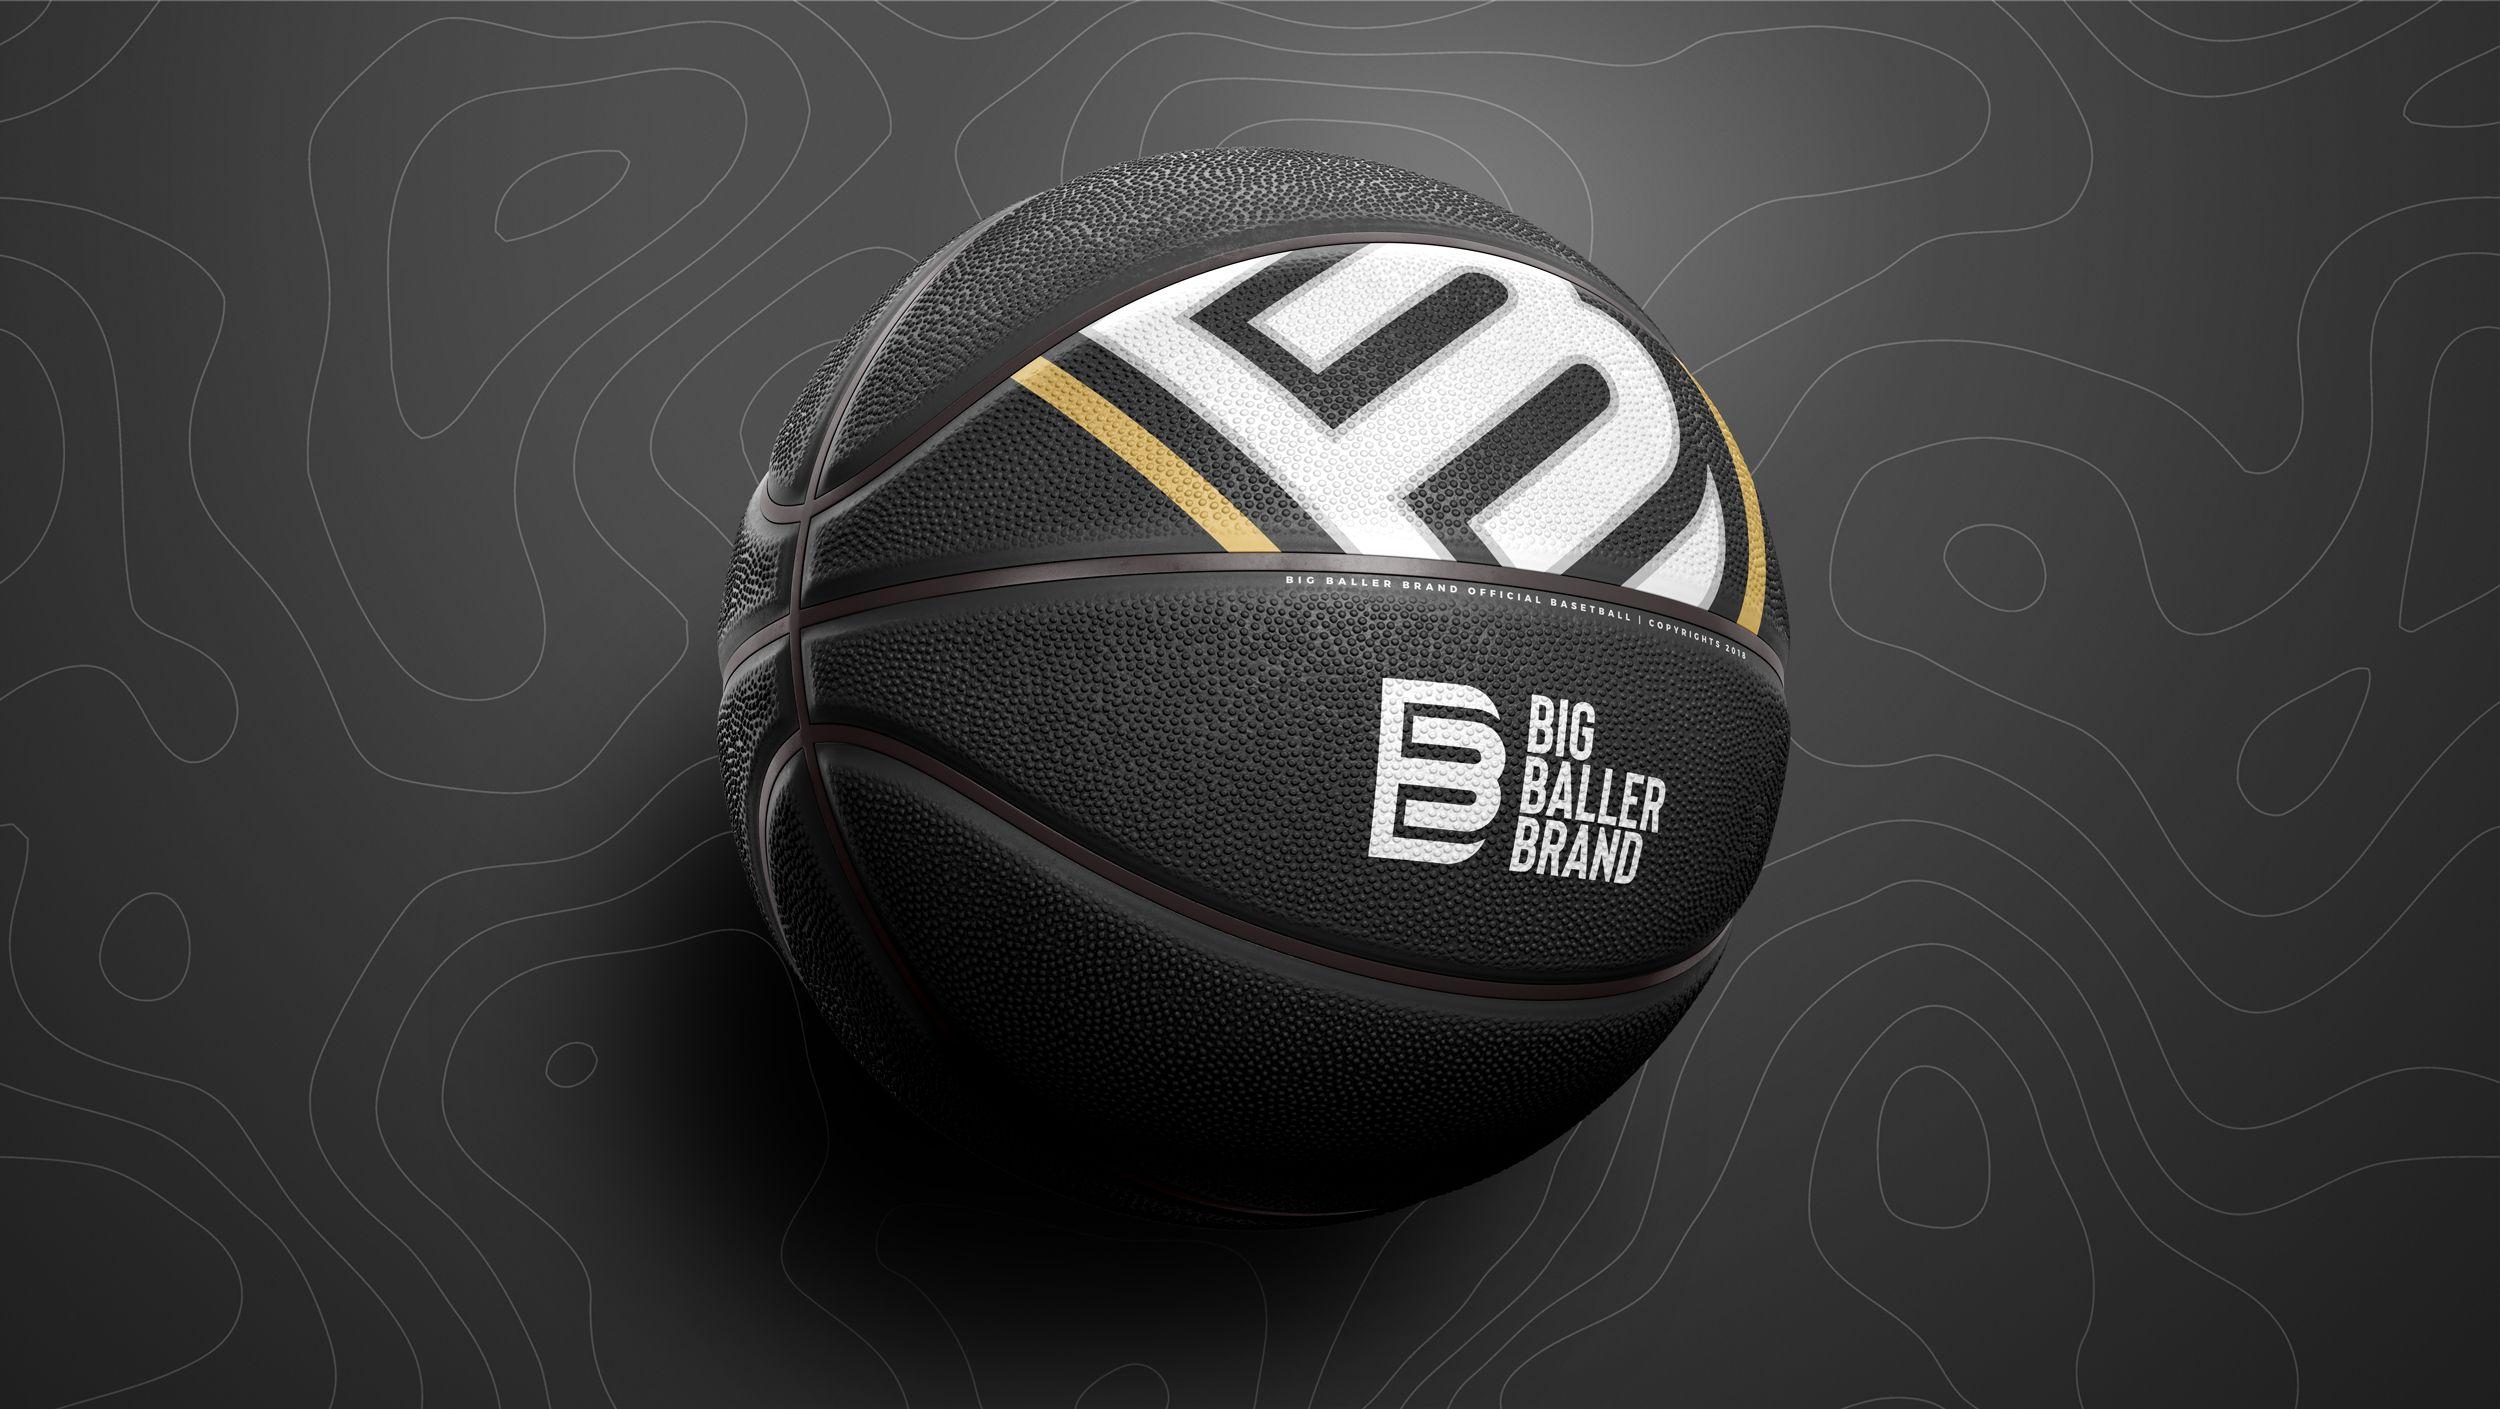 Big Baller Logo - SoCal Design Agency Decides to Remix Big Baller Brand Logo